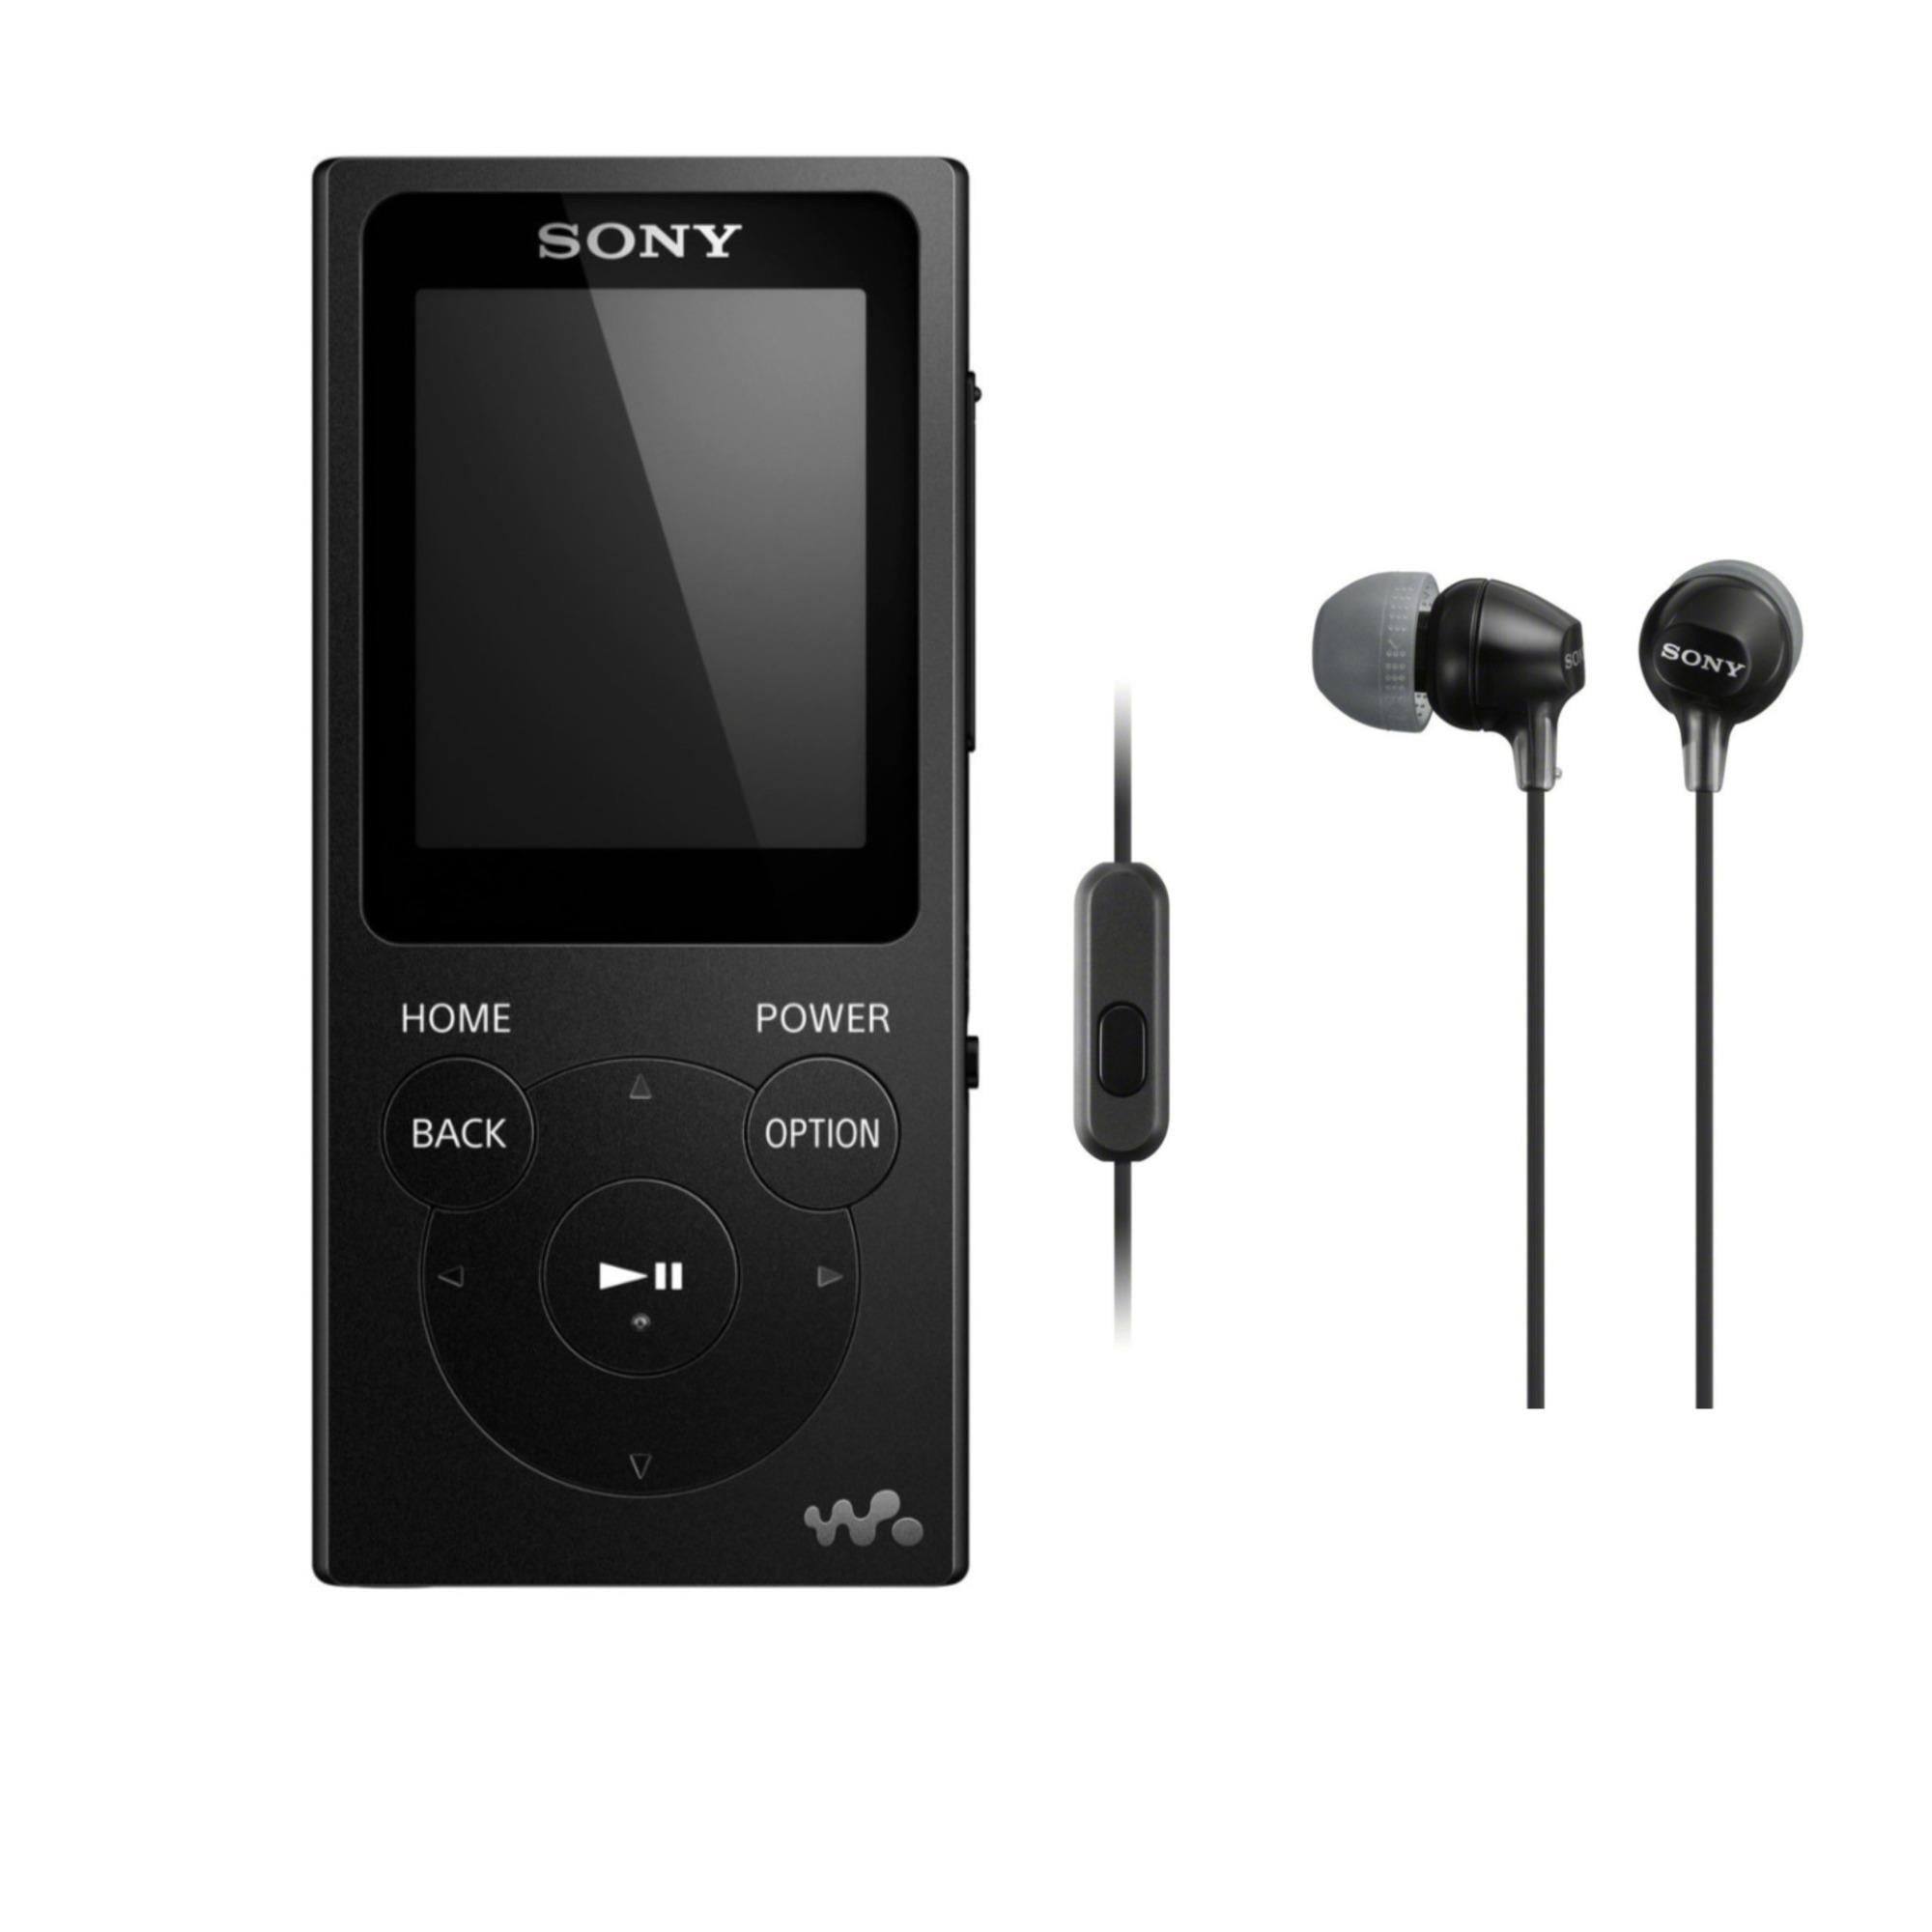 Person med ansvar for sportsspil gødning Prestige Sony Walkman 8GB MP3 Player with LCD Display, Black, NWE394B_K2 -  Walmart.com